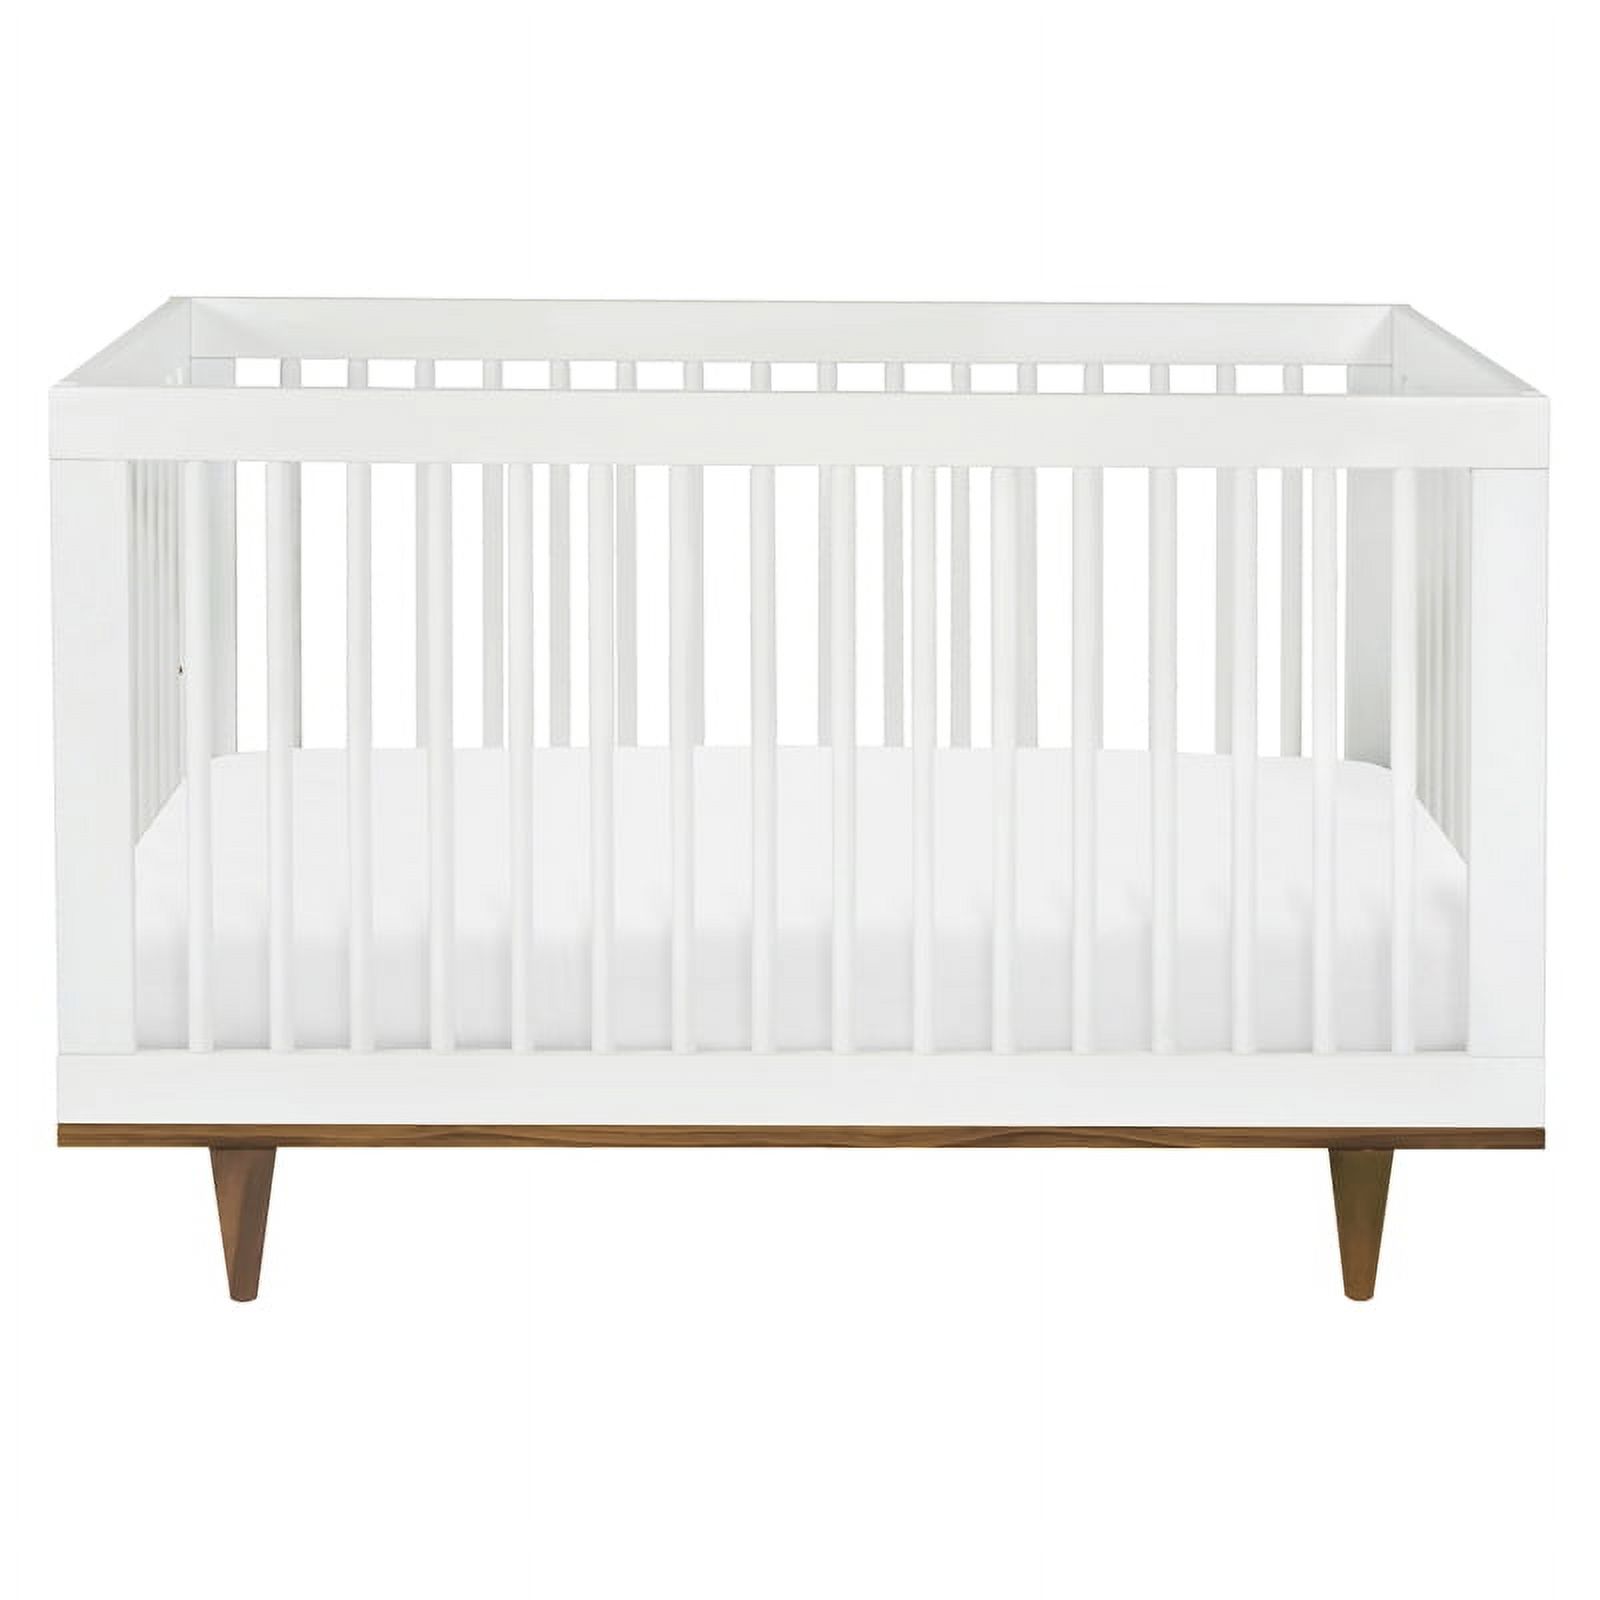 Davinci Marley Modern Pine Wood 3-In-1 Convertible Crib in White/Walnut - image 3 of 10